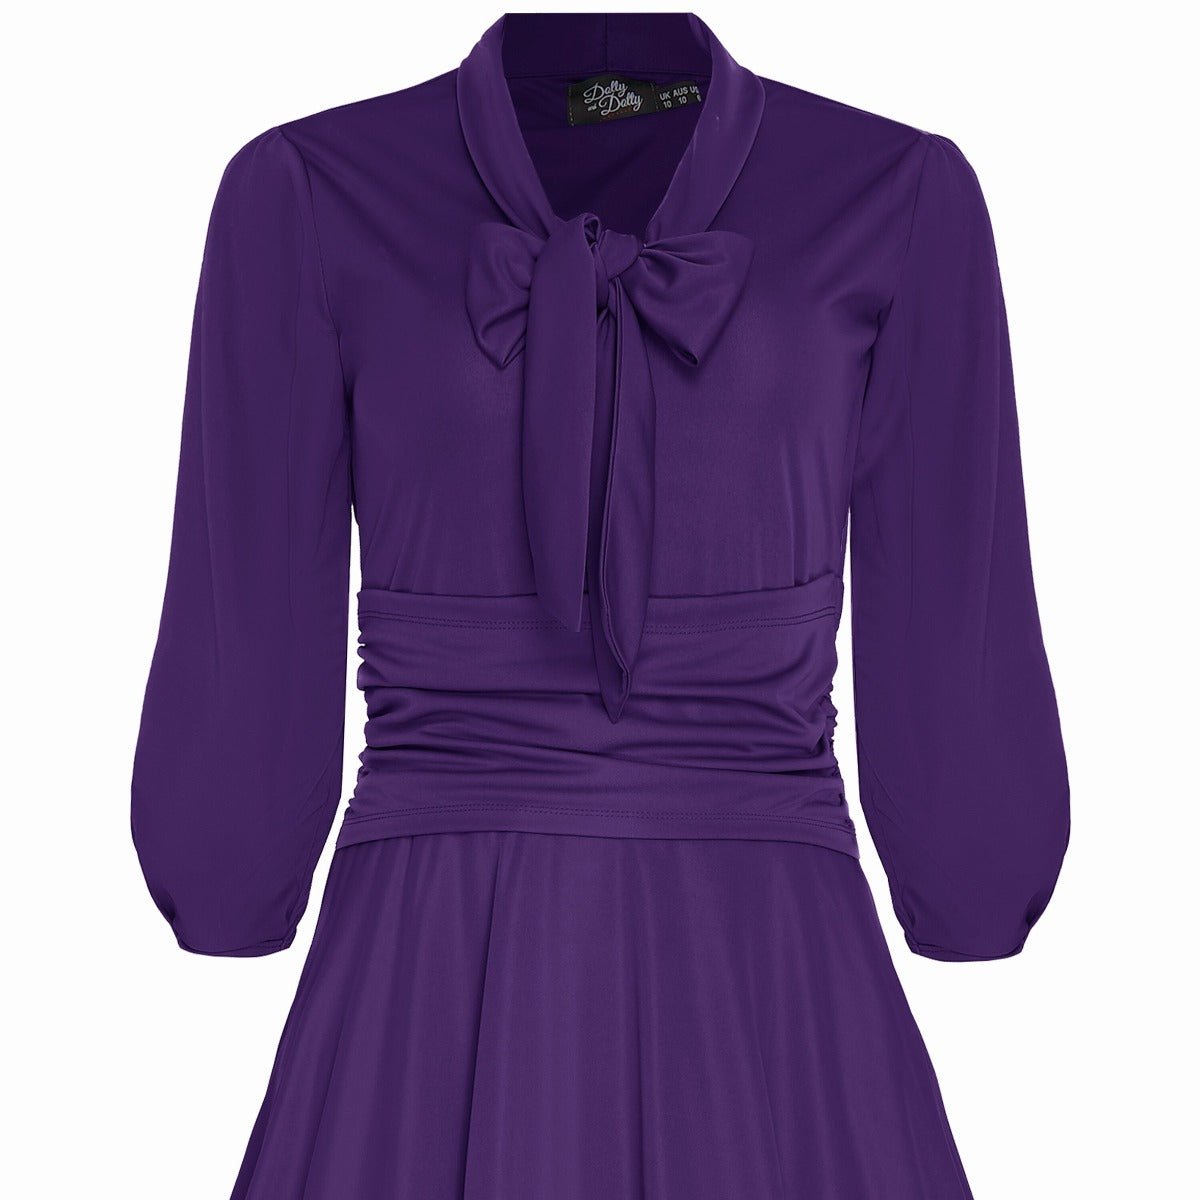 Sandra Vintage Inspired Stretchy Bright Purple Bow Tie Dress